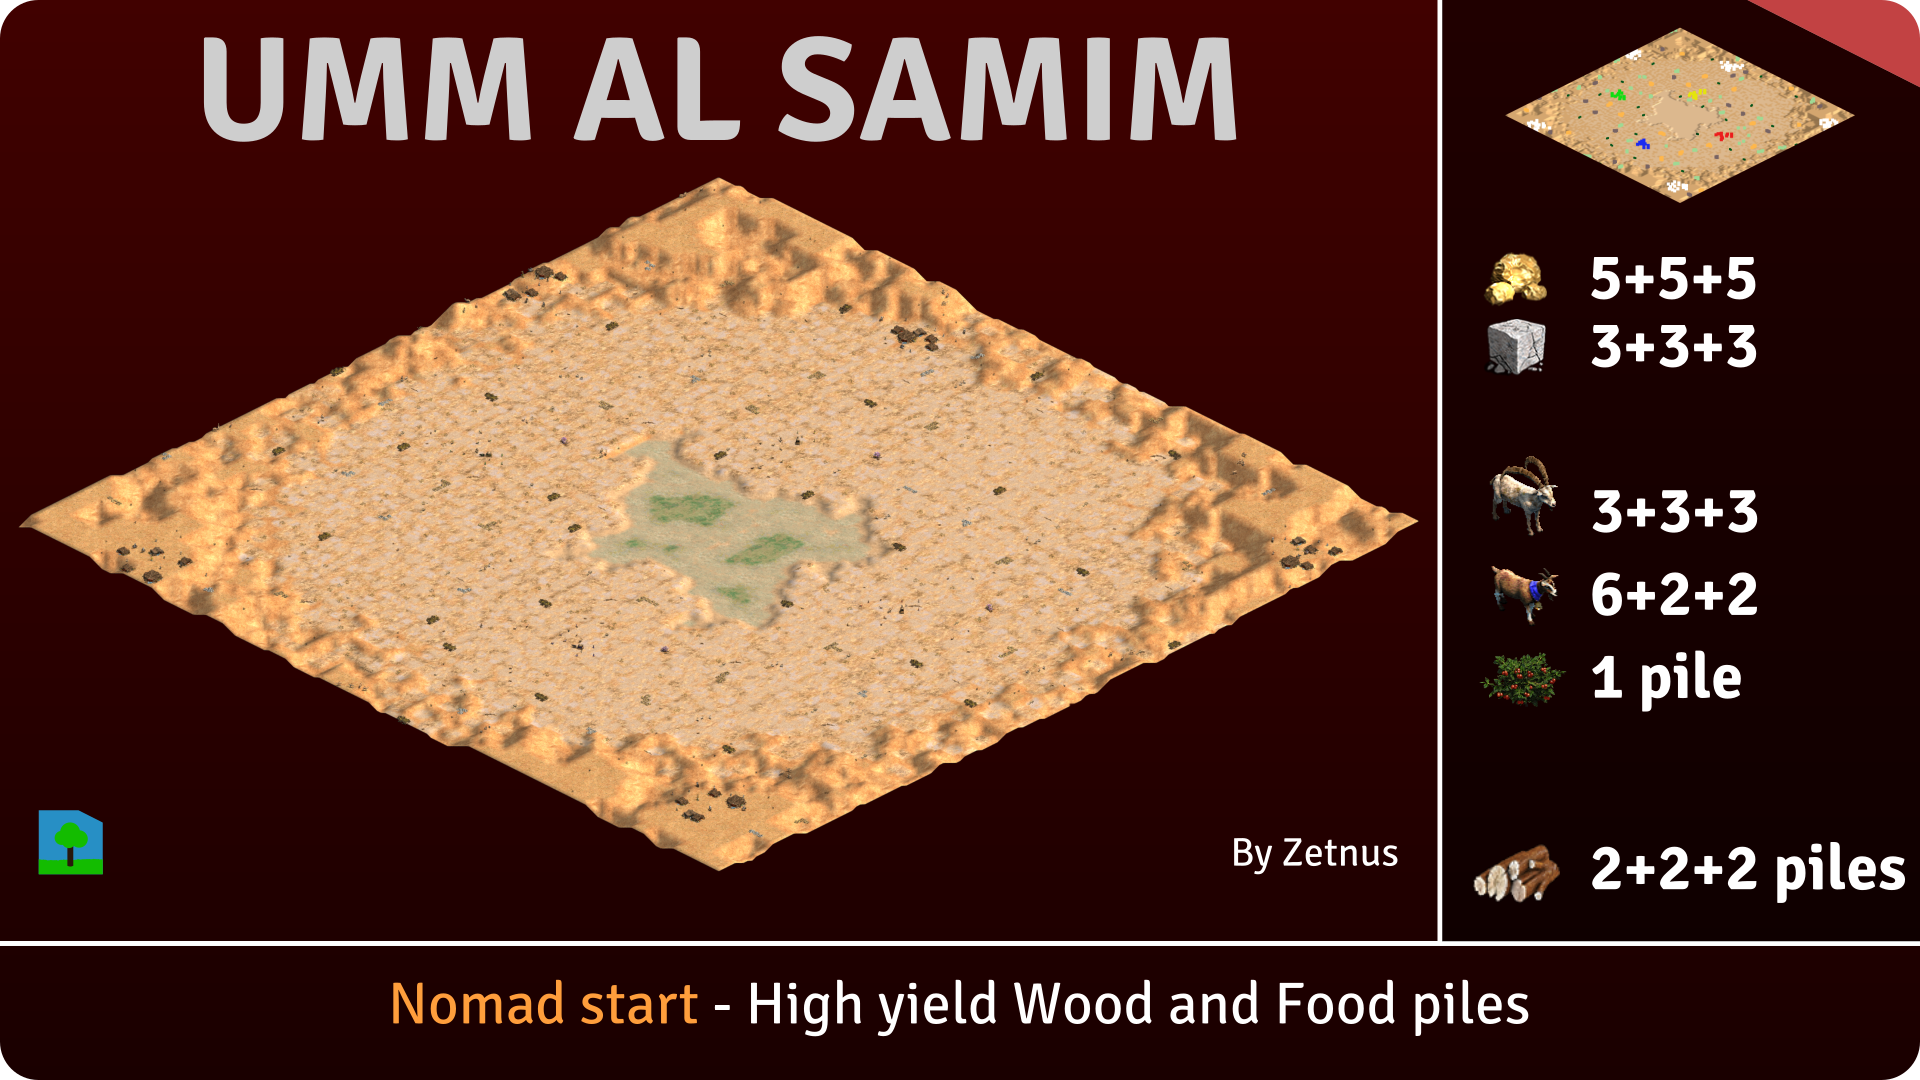 as-umm-al-samim-png.199680